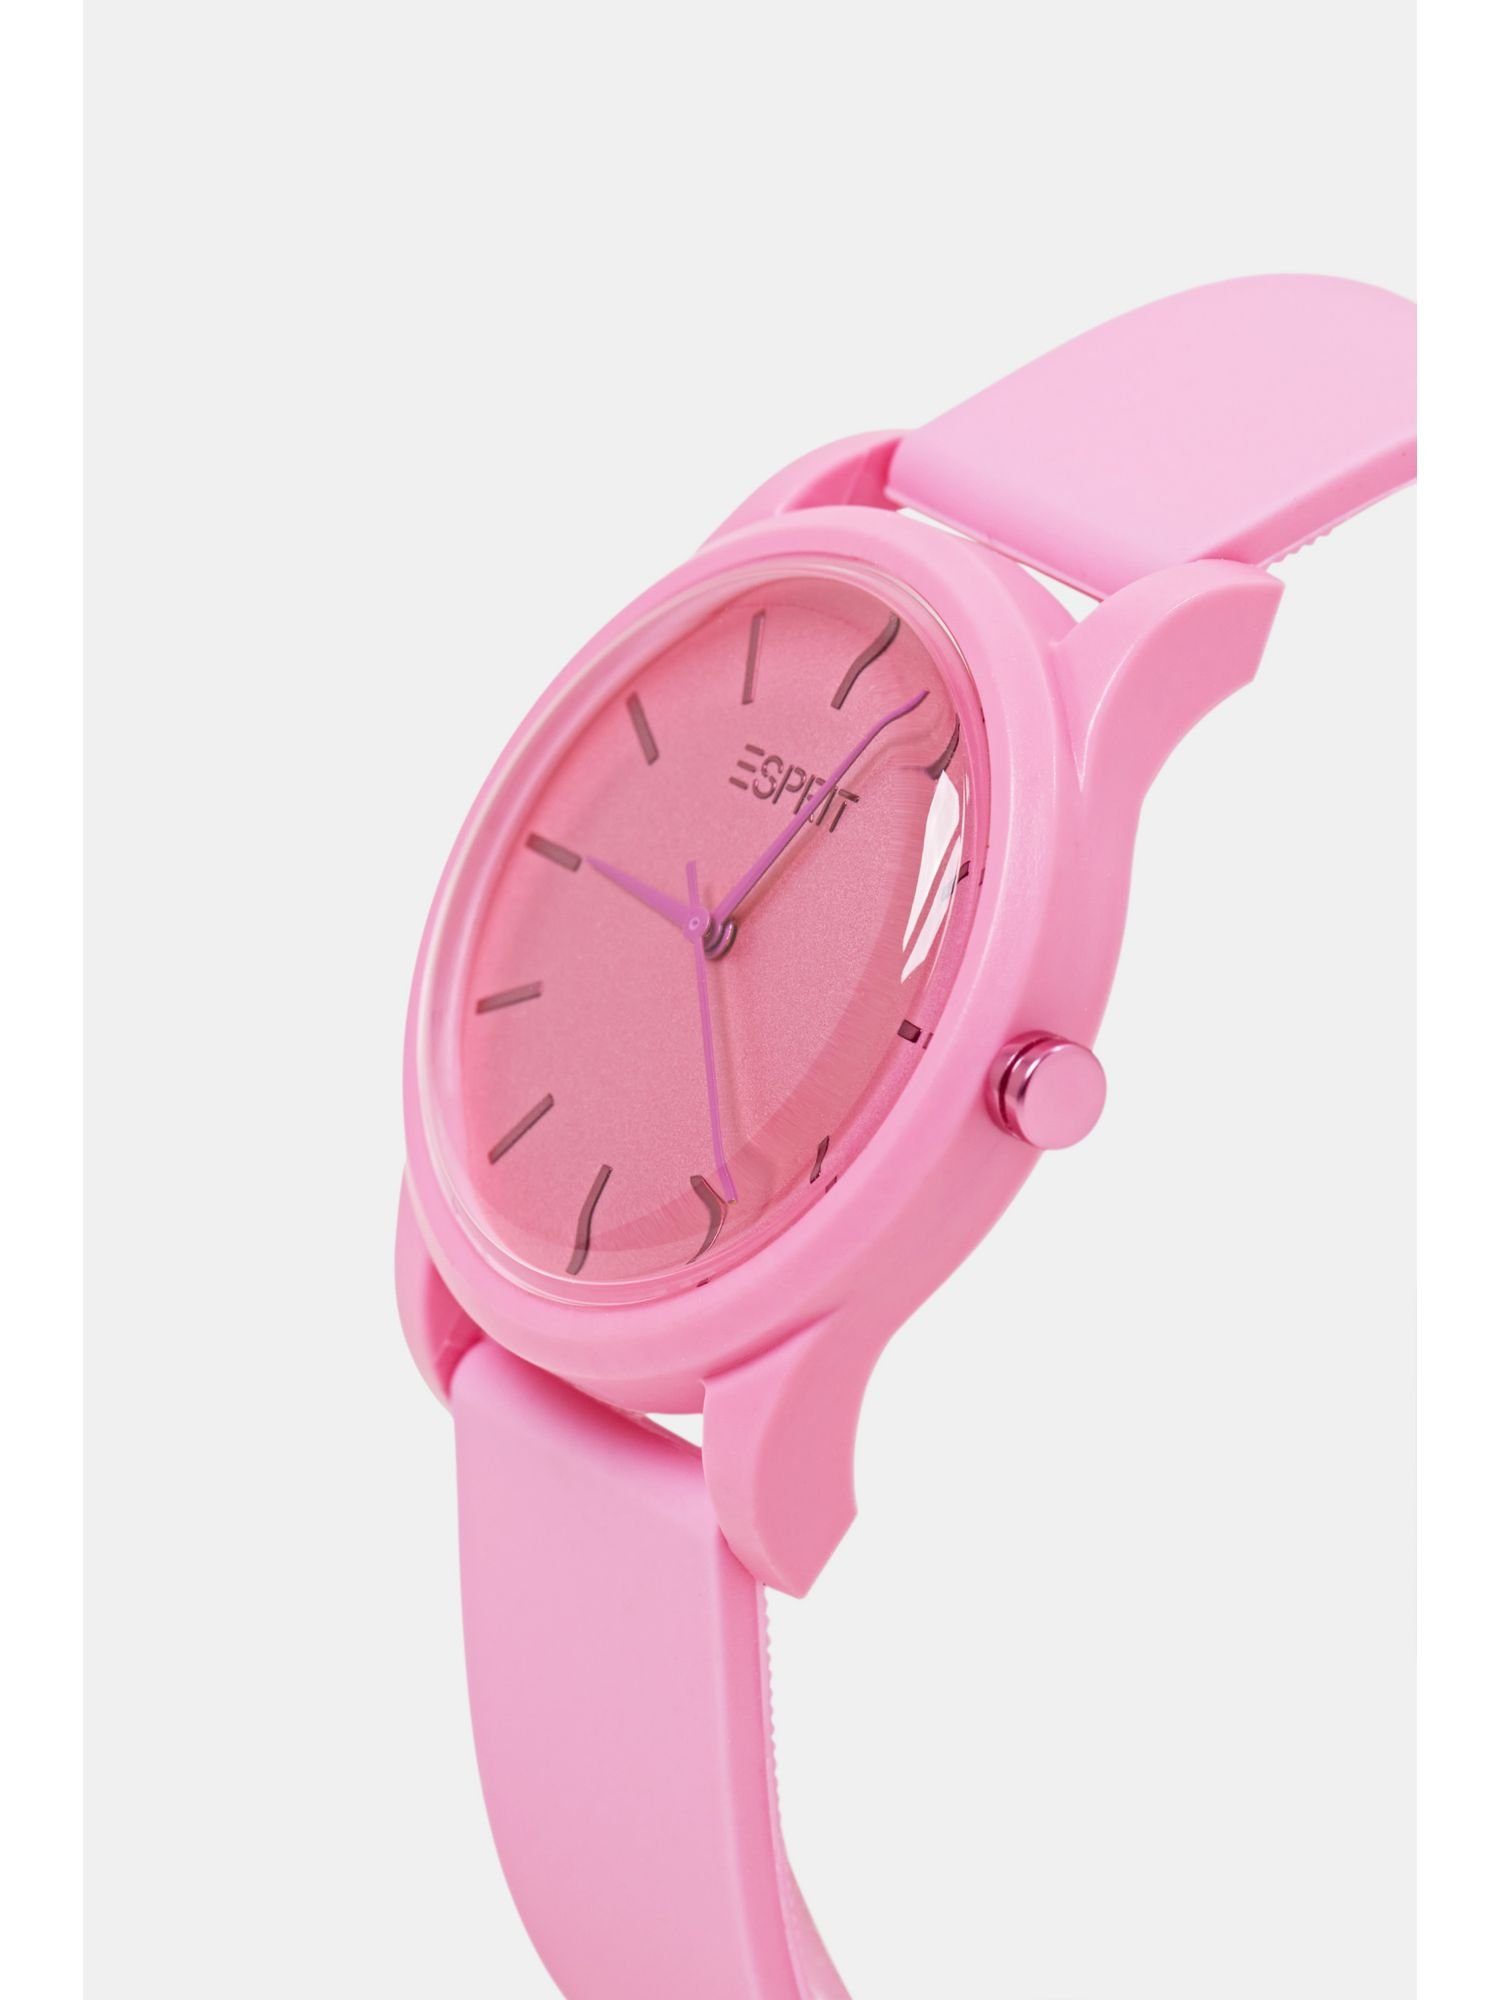 Farbige mit pink Gummiarmband Chronograph Esprit Uhr